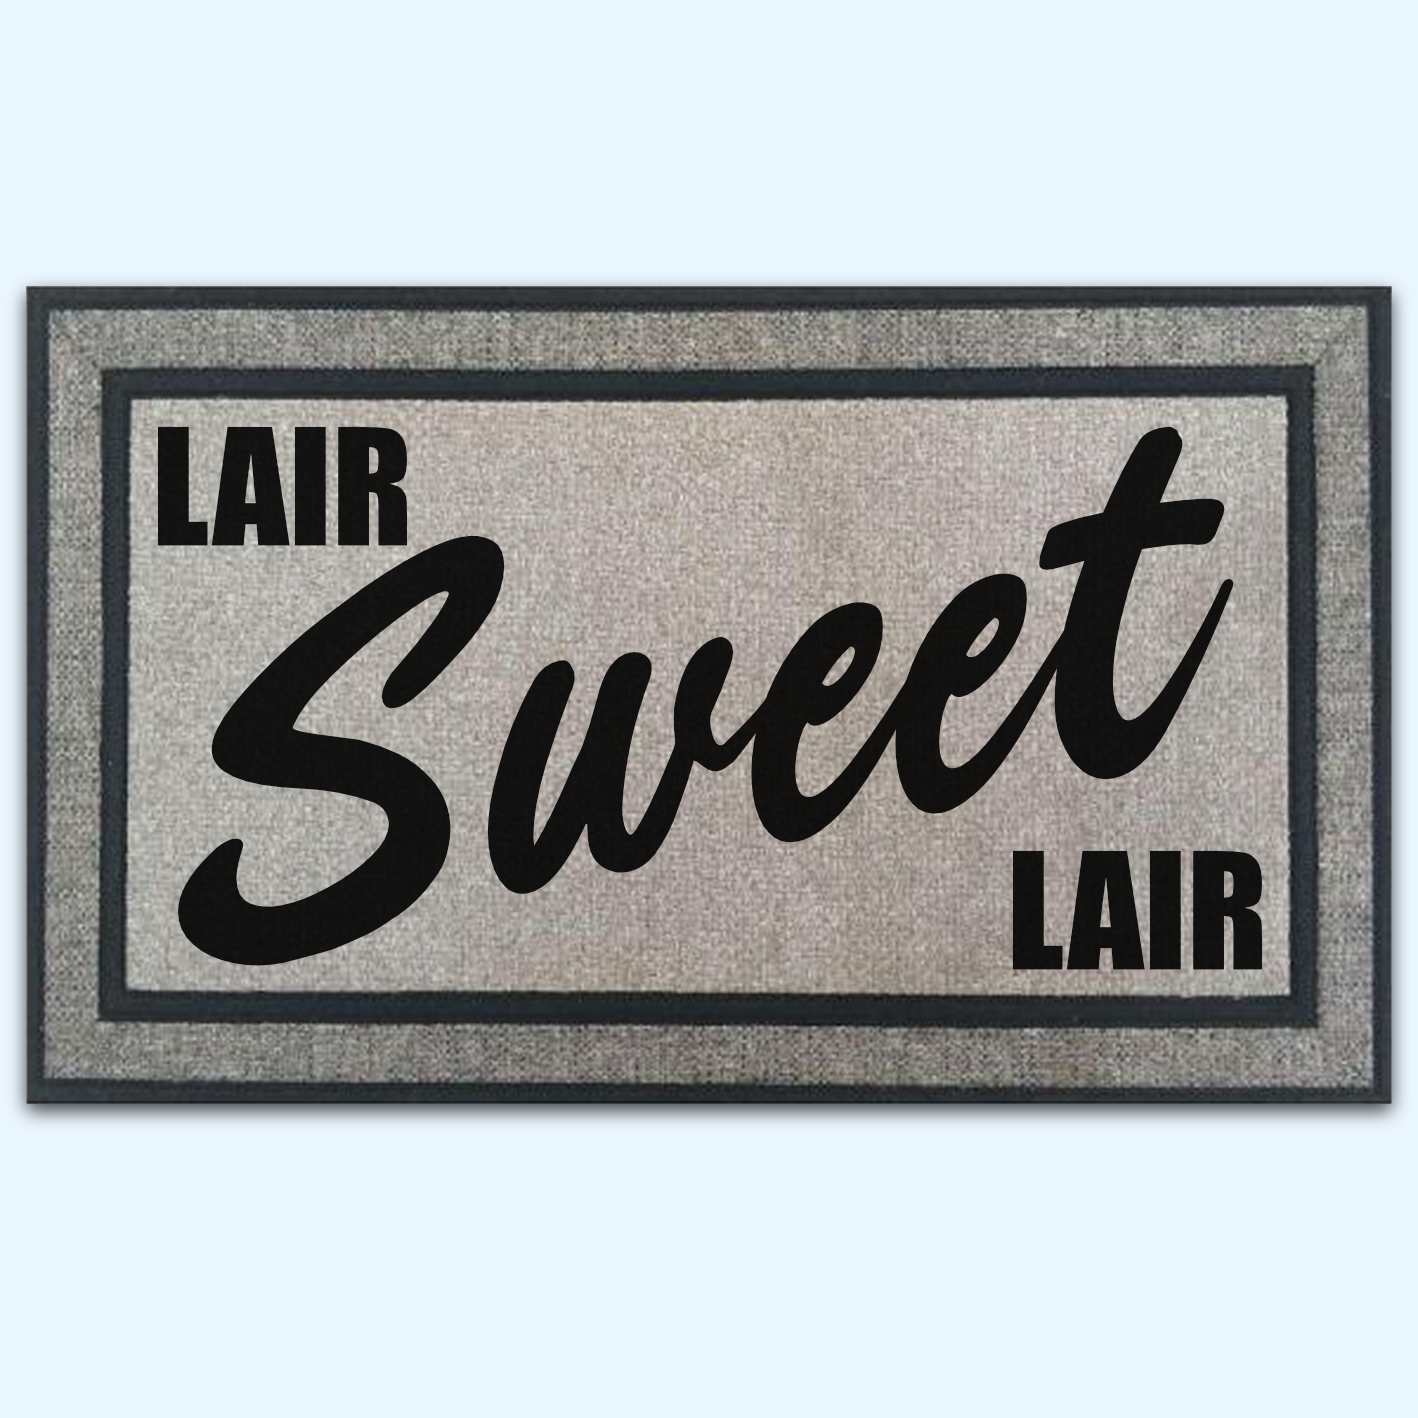 Lair Sweet Lair Board Game Door Mat